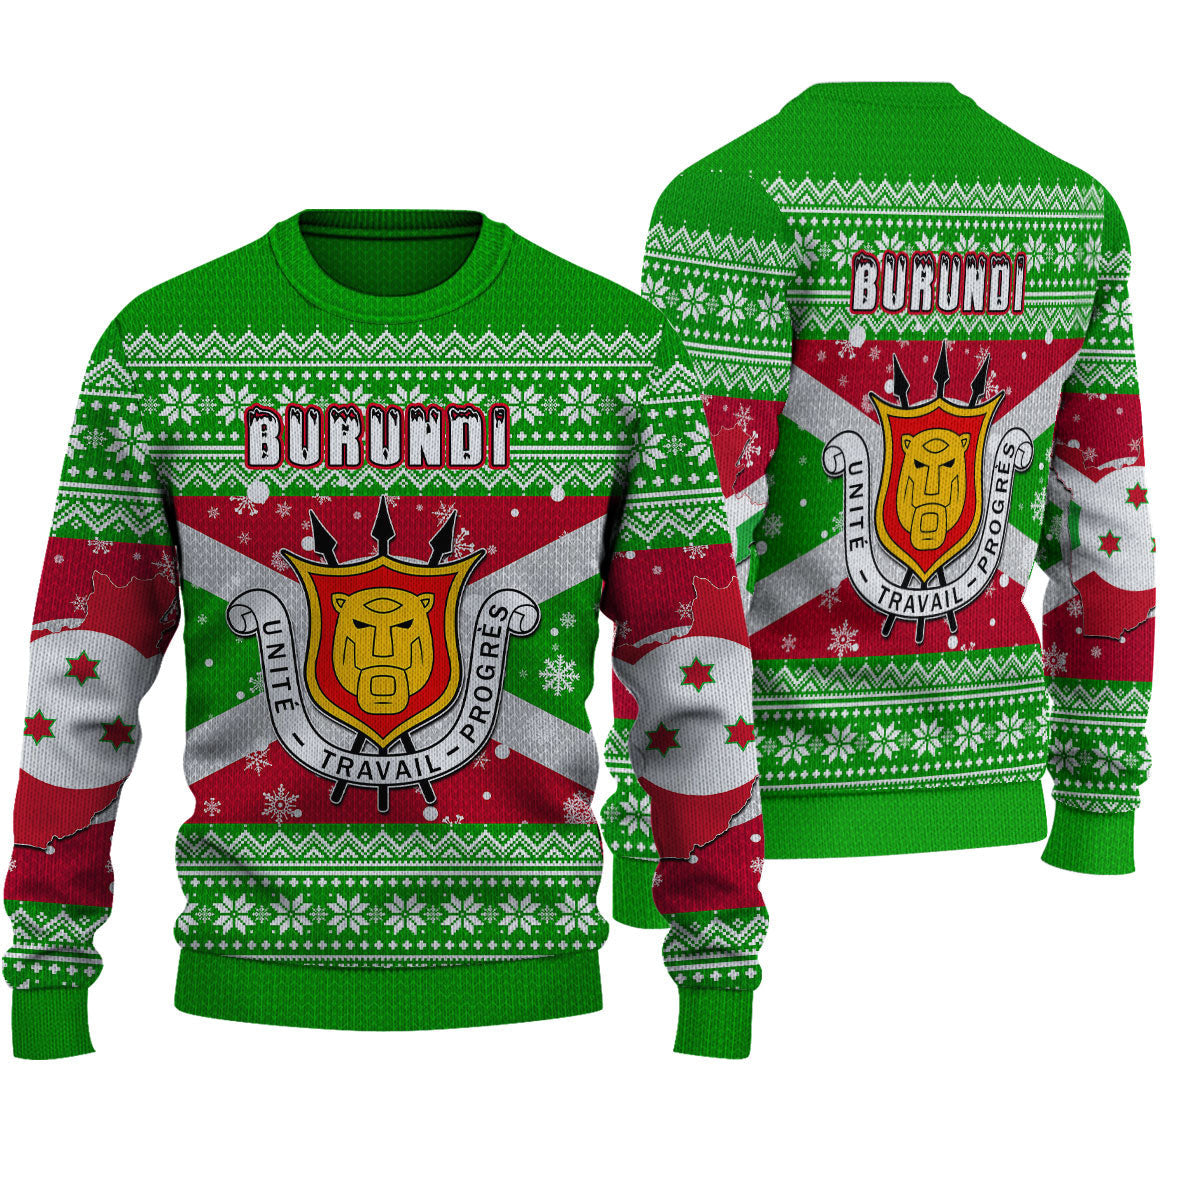 burundi-christmas-knitted-sweater